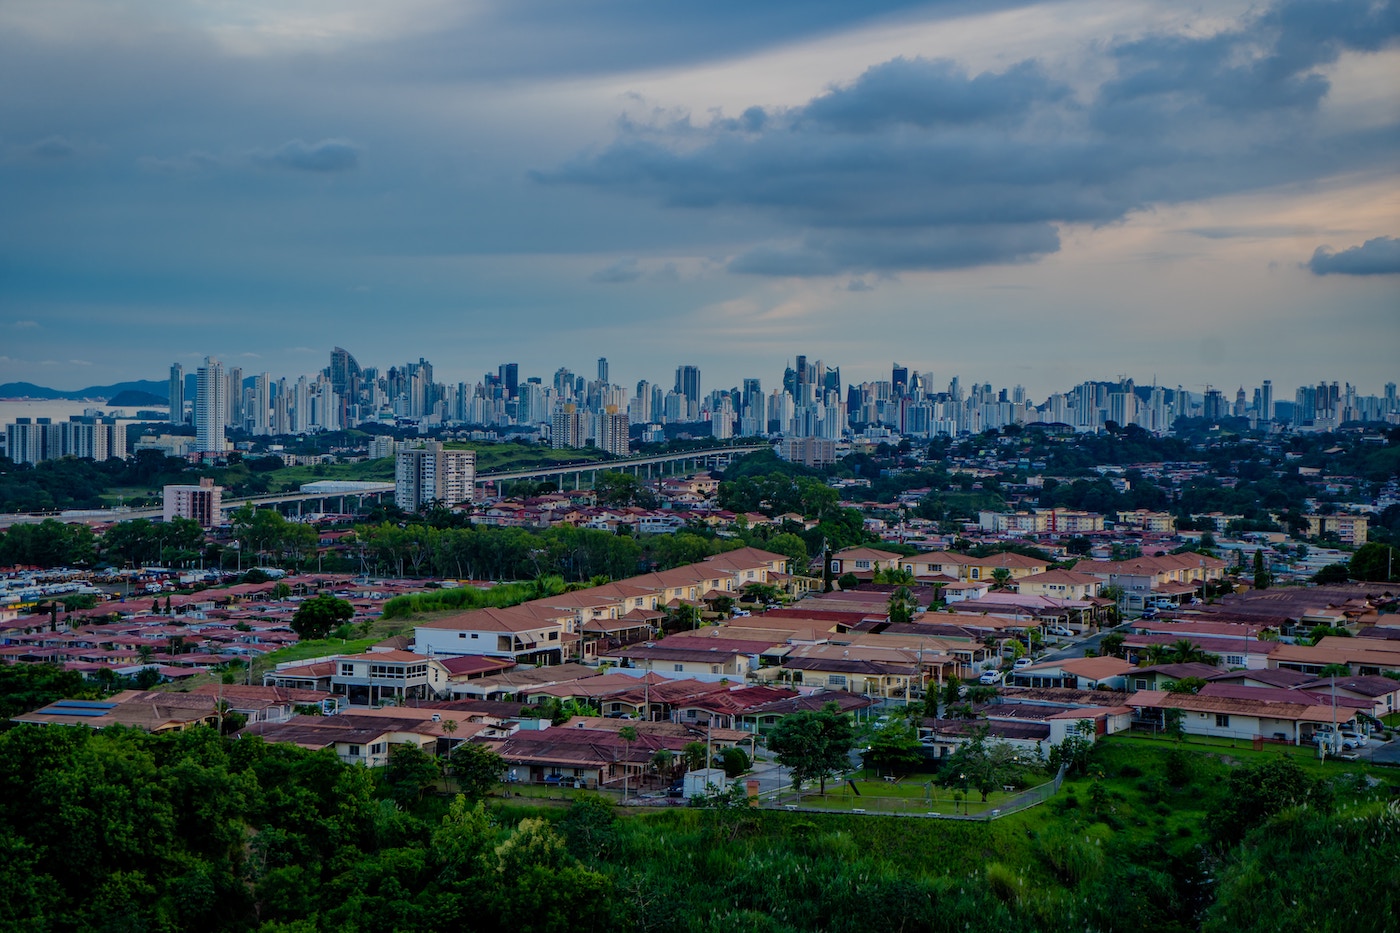 Panama-Stad